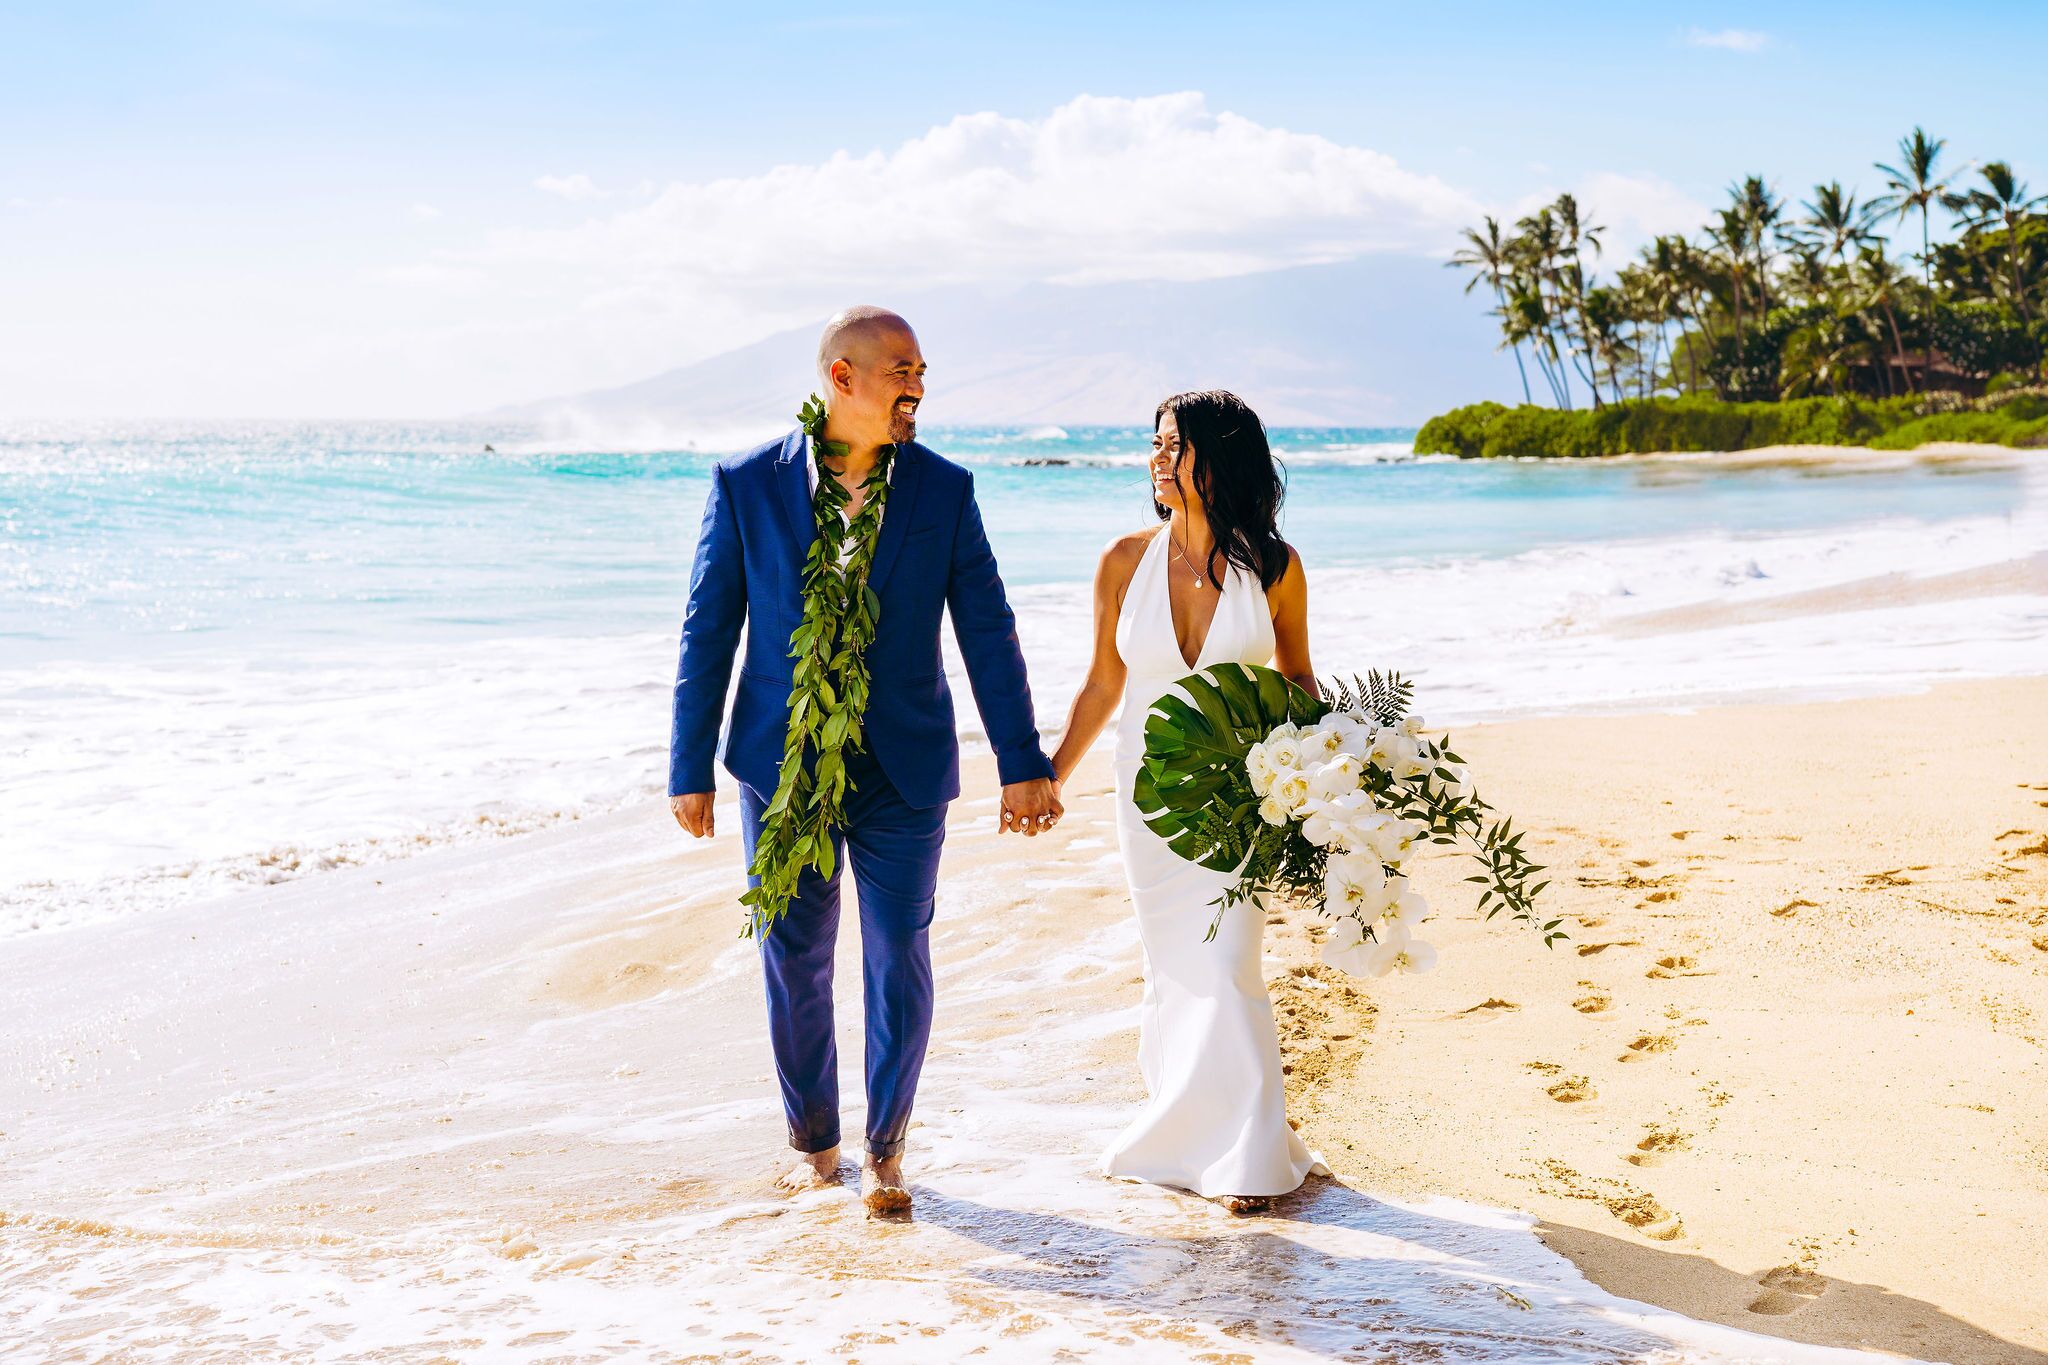 HAPPILY MAUI'D for Hawaii or Maui Weddings 7 x 24